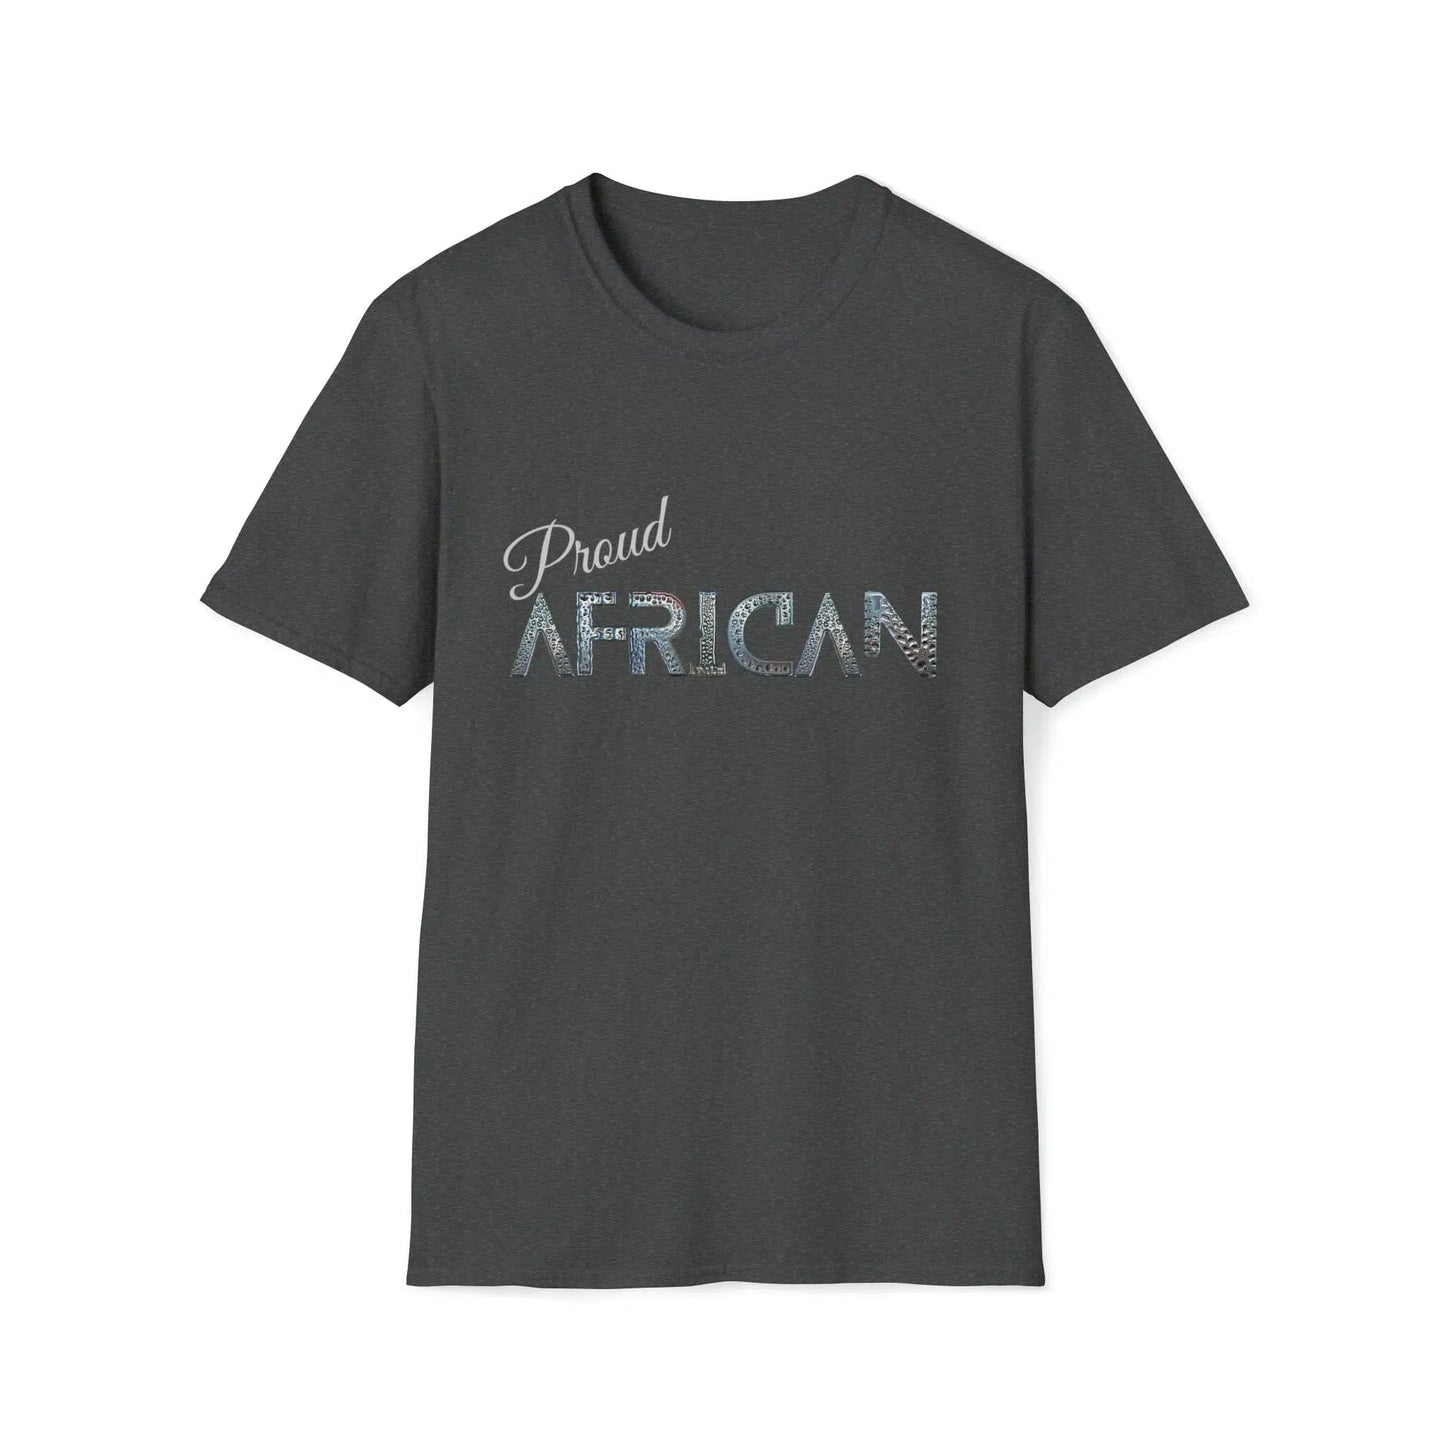 Black empowerment pride tee shirts | Proud African